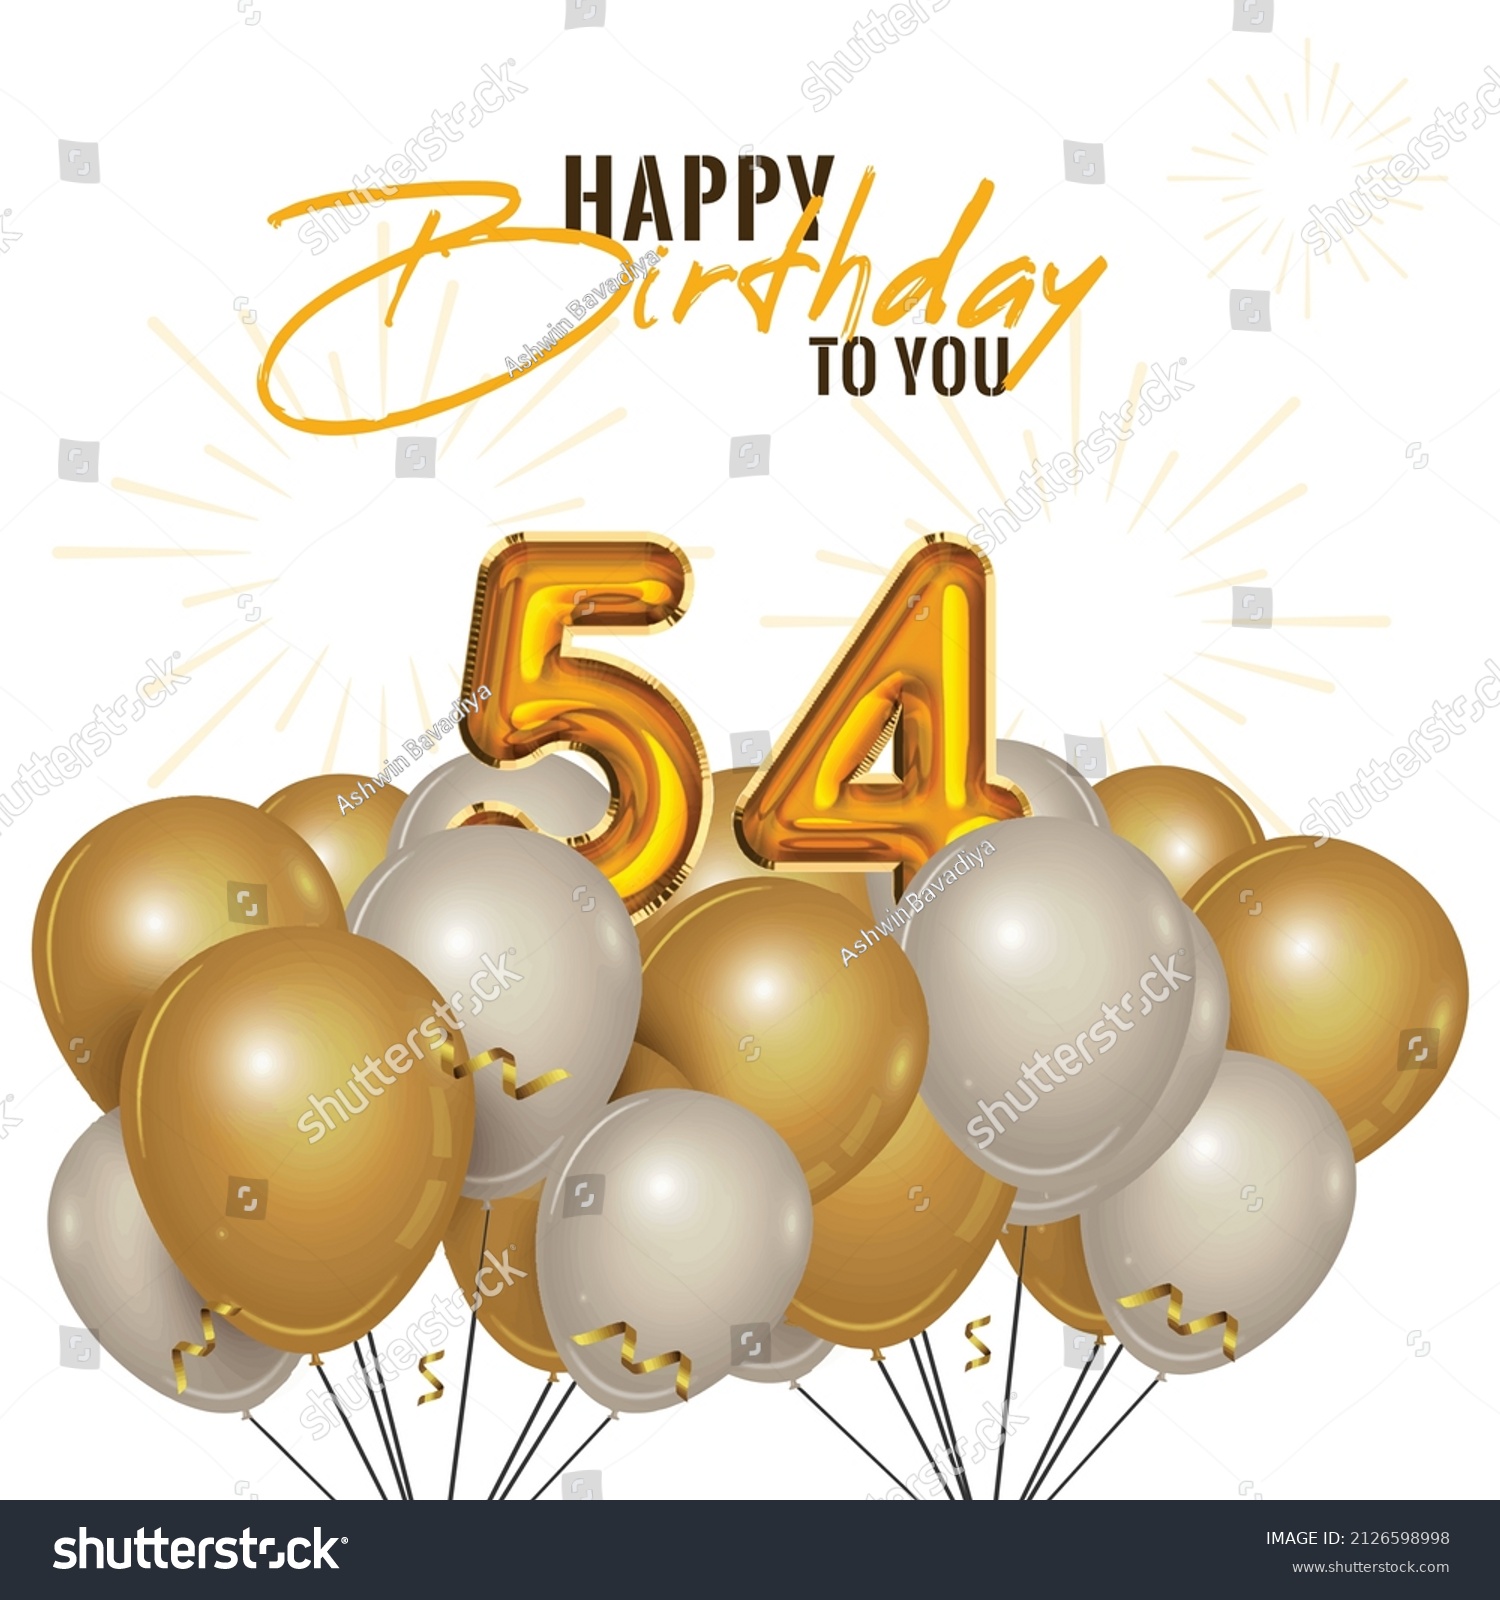 Happy 54th birthday, greeting card, vector - Royalty Free Stock Vector ...